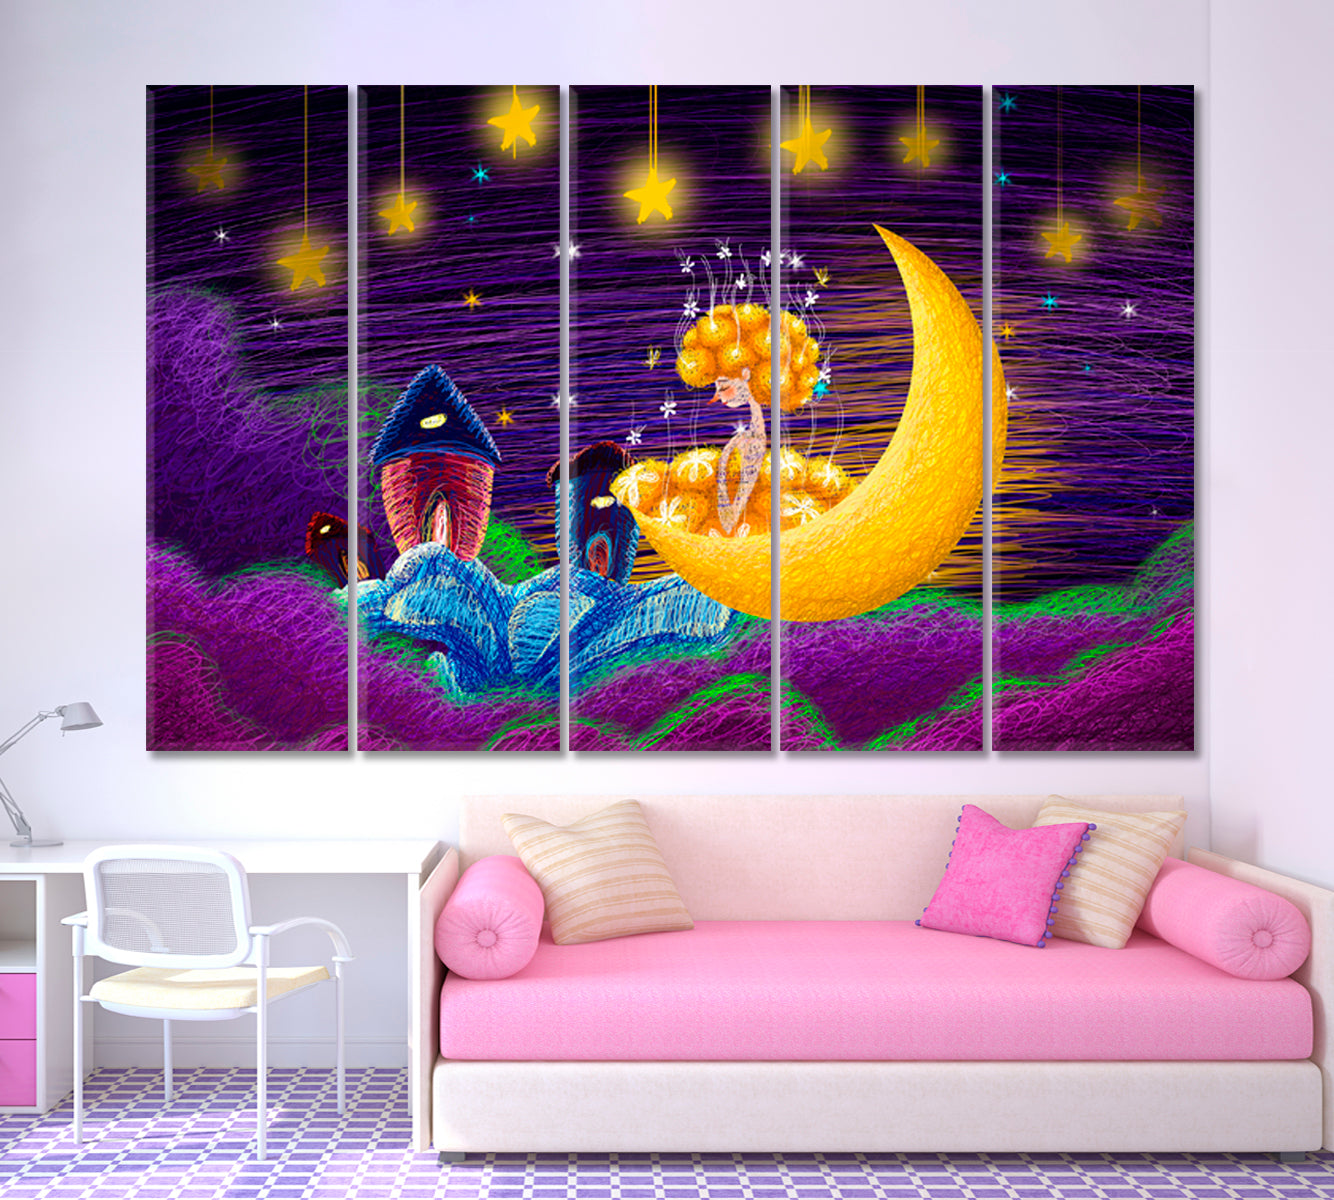 Night Fairy-tale Children's Room Wall Art Canvas Print Kids Room Canvas Art Print Artesty 5 panels 36" x 24" 